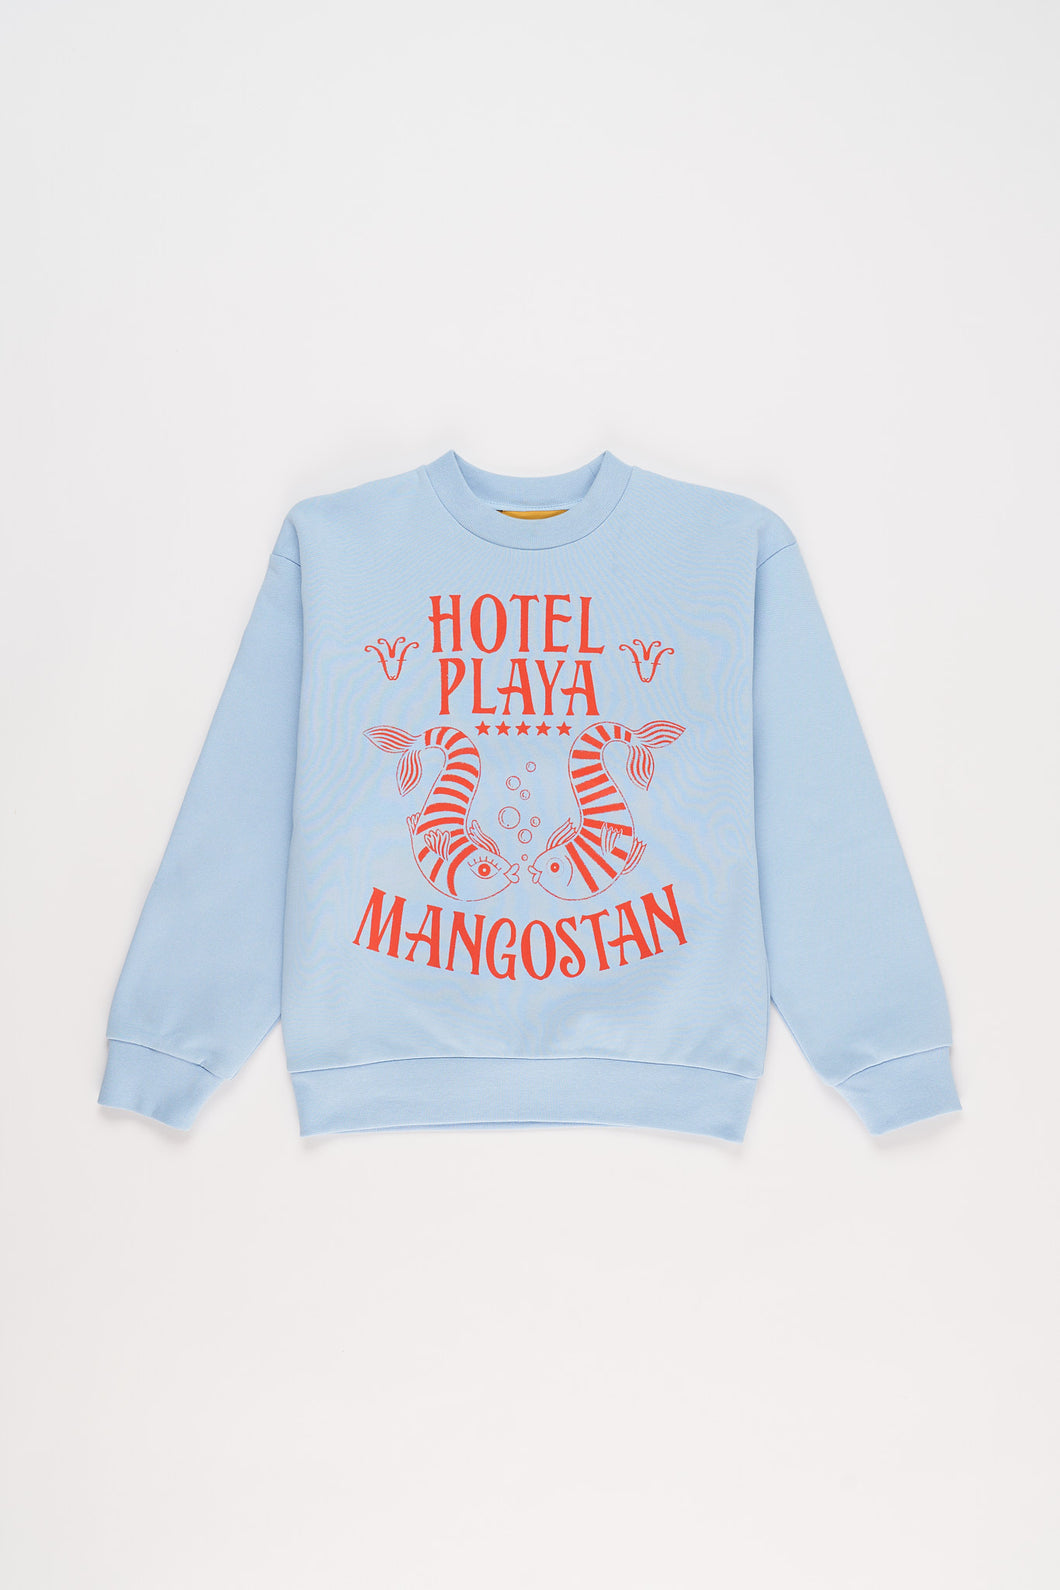 Maison Mangostan / Hotel Playa Sweatshirt / Light Blue